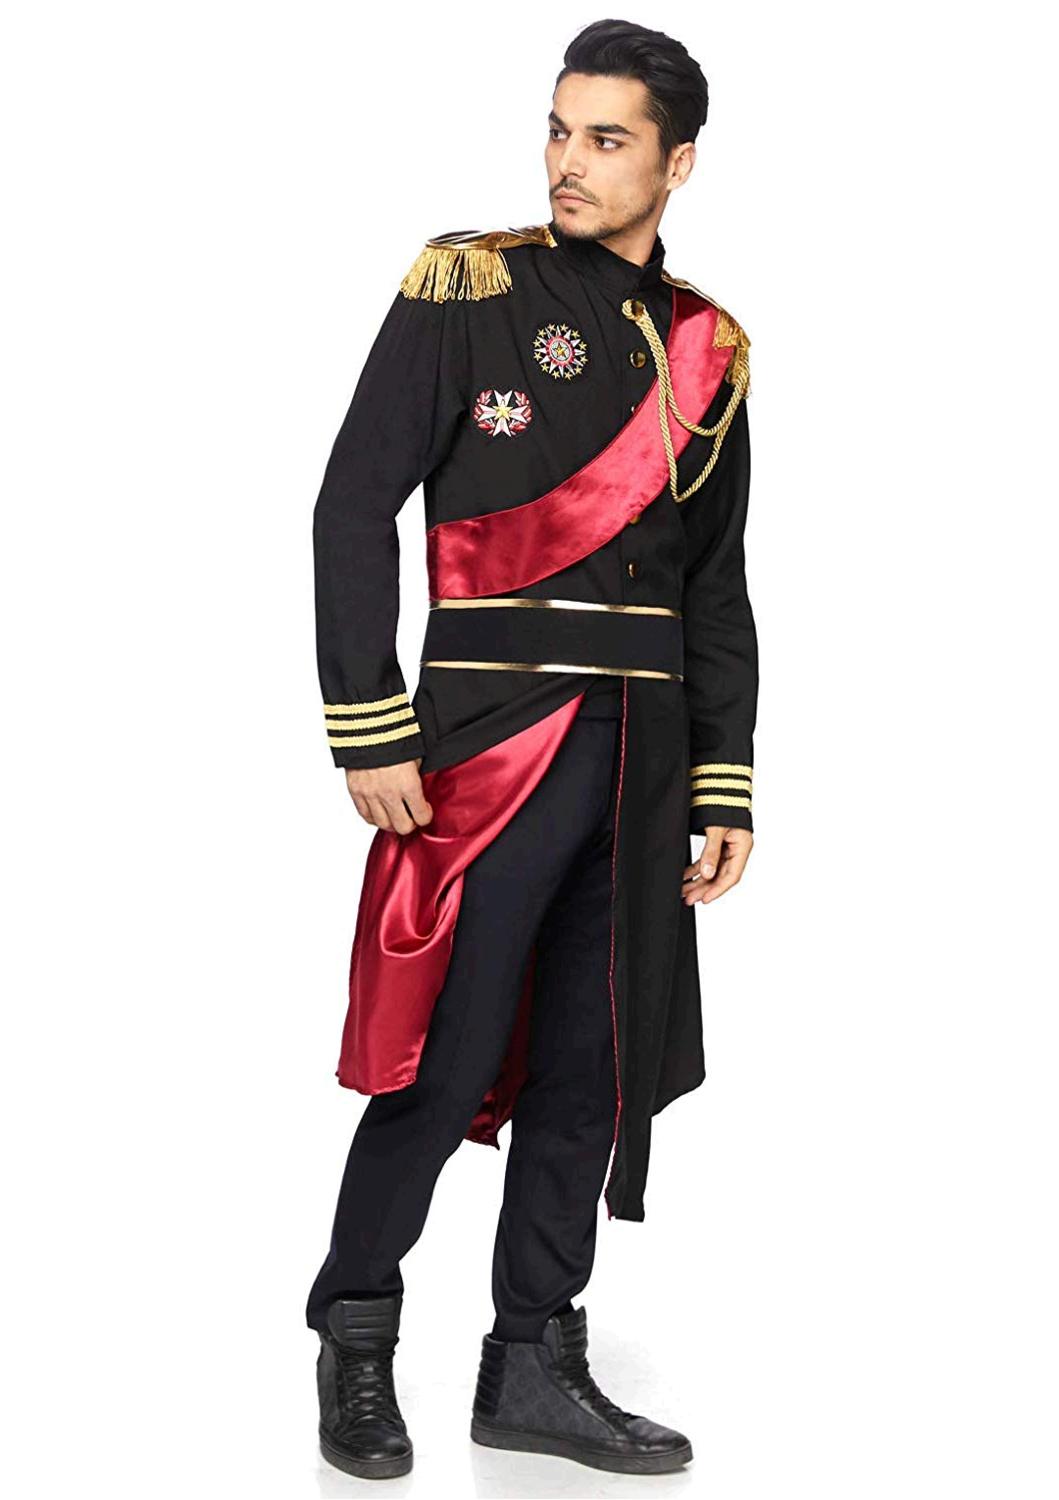 Leg Avenue Men's 2 Piece Military General Costume, Black,, Black, Size ...